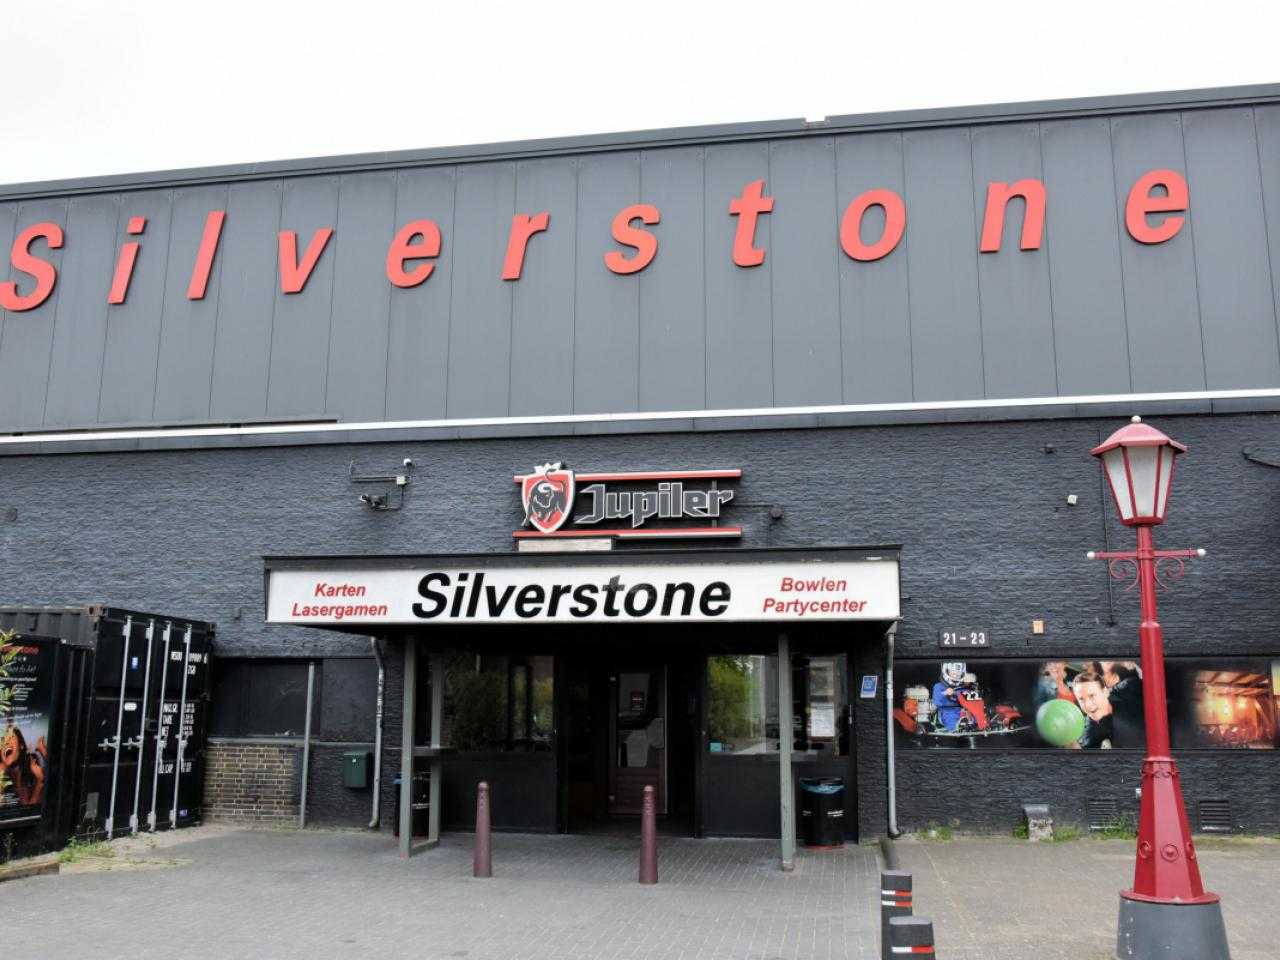 Silverstone entrance